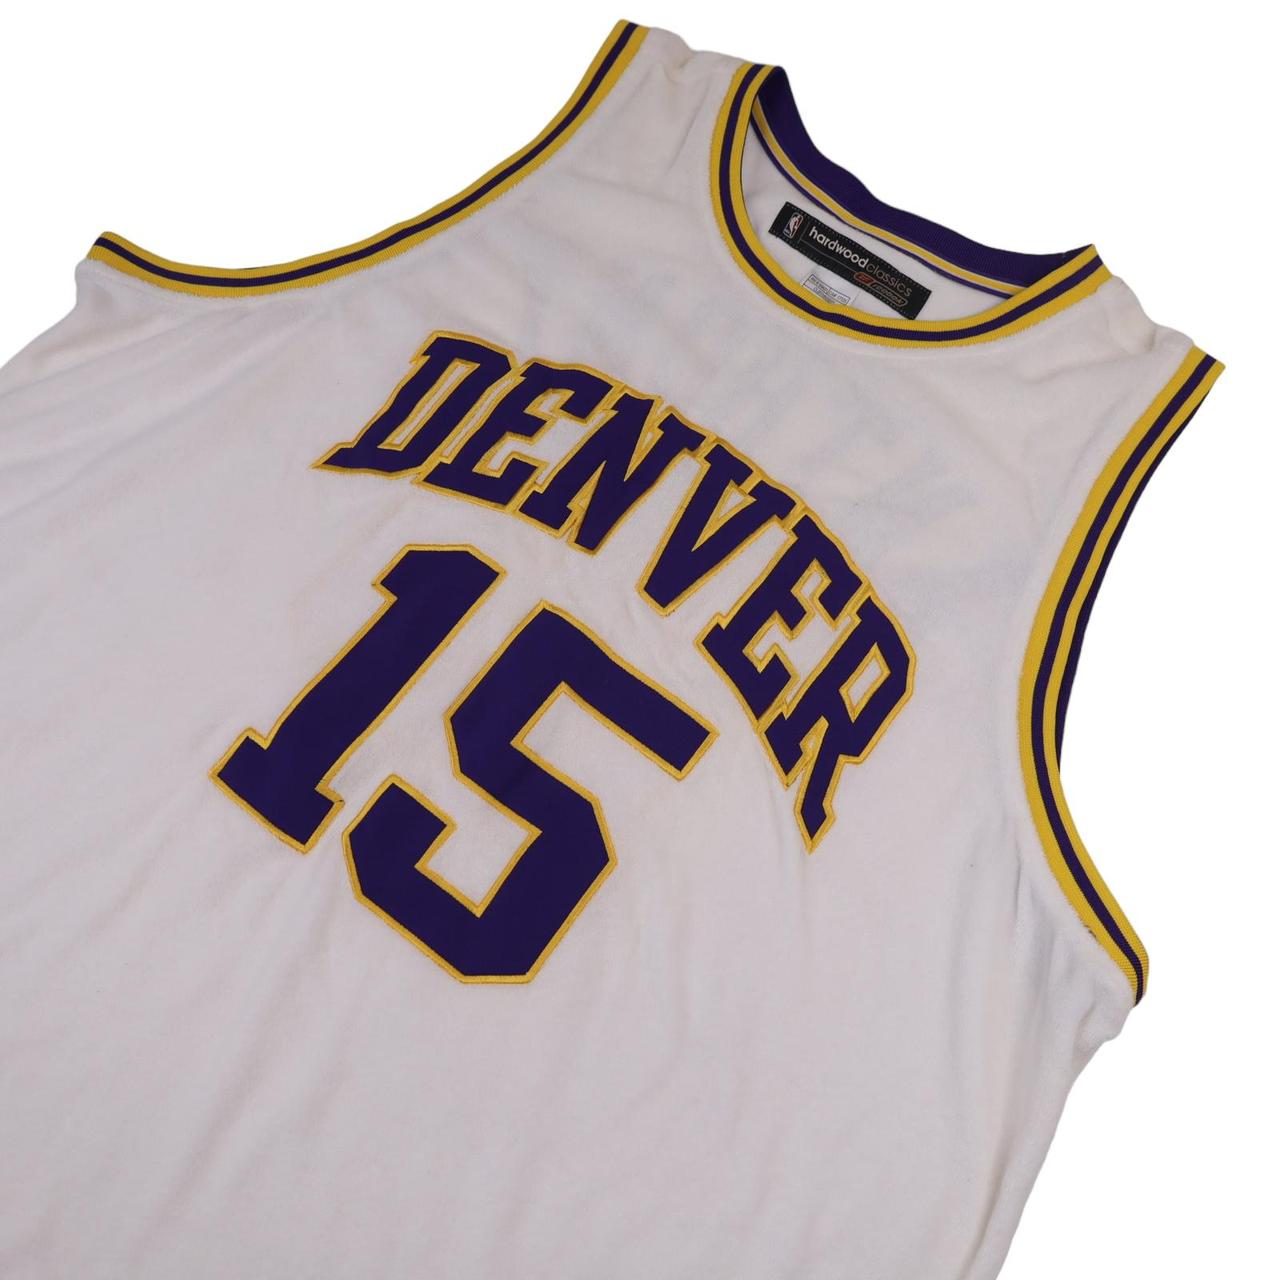 Hardwood Classic Denver Nuggets NBA *Anthony* Shirt XL XL